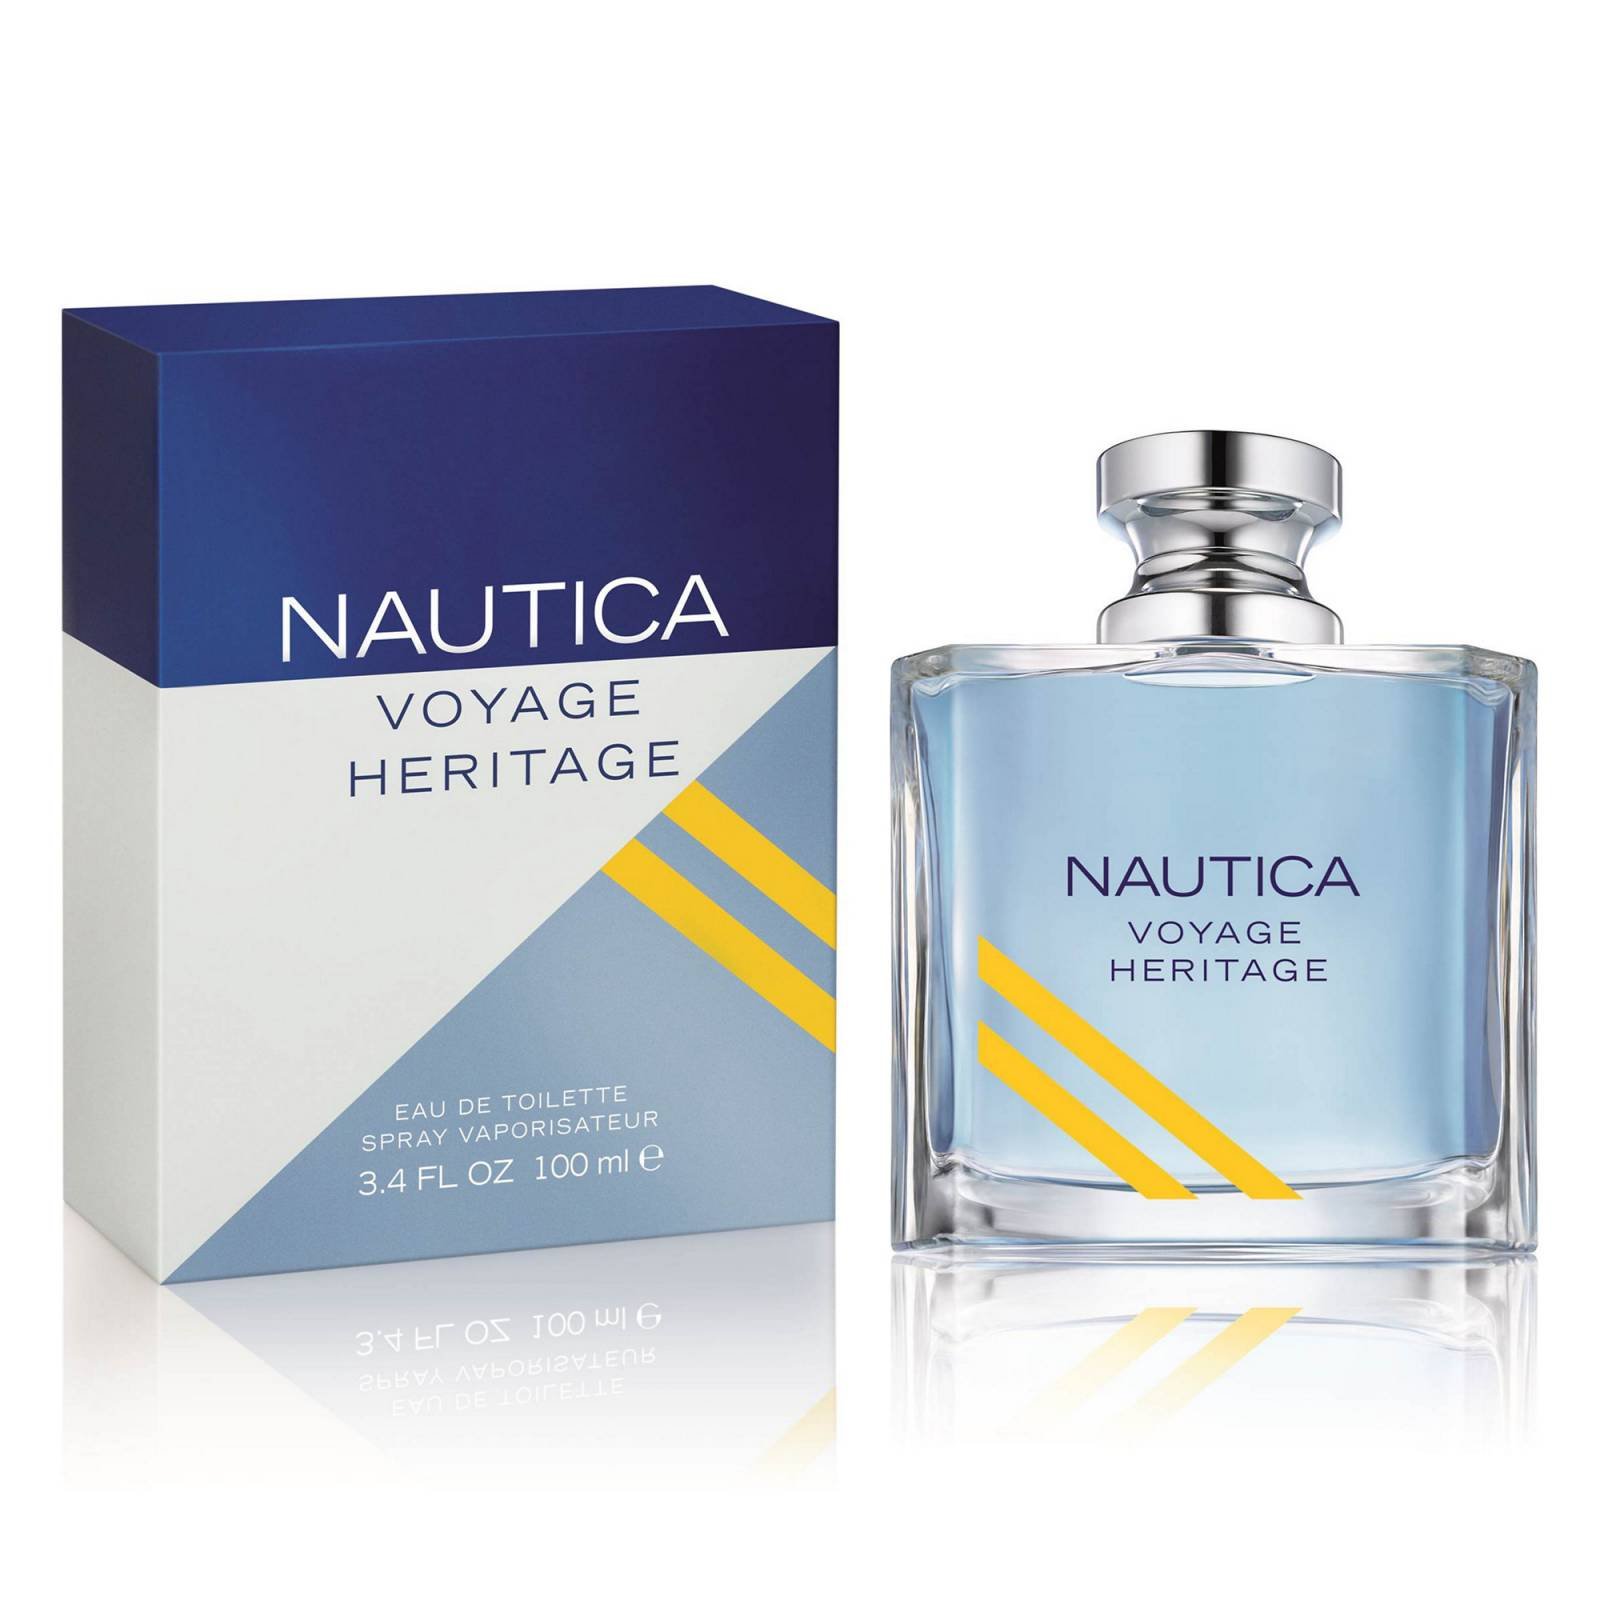 perfume voyage nautica